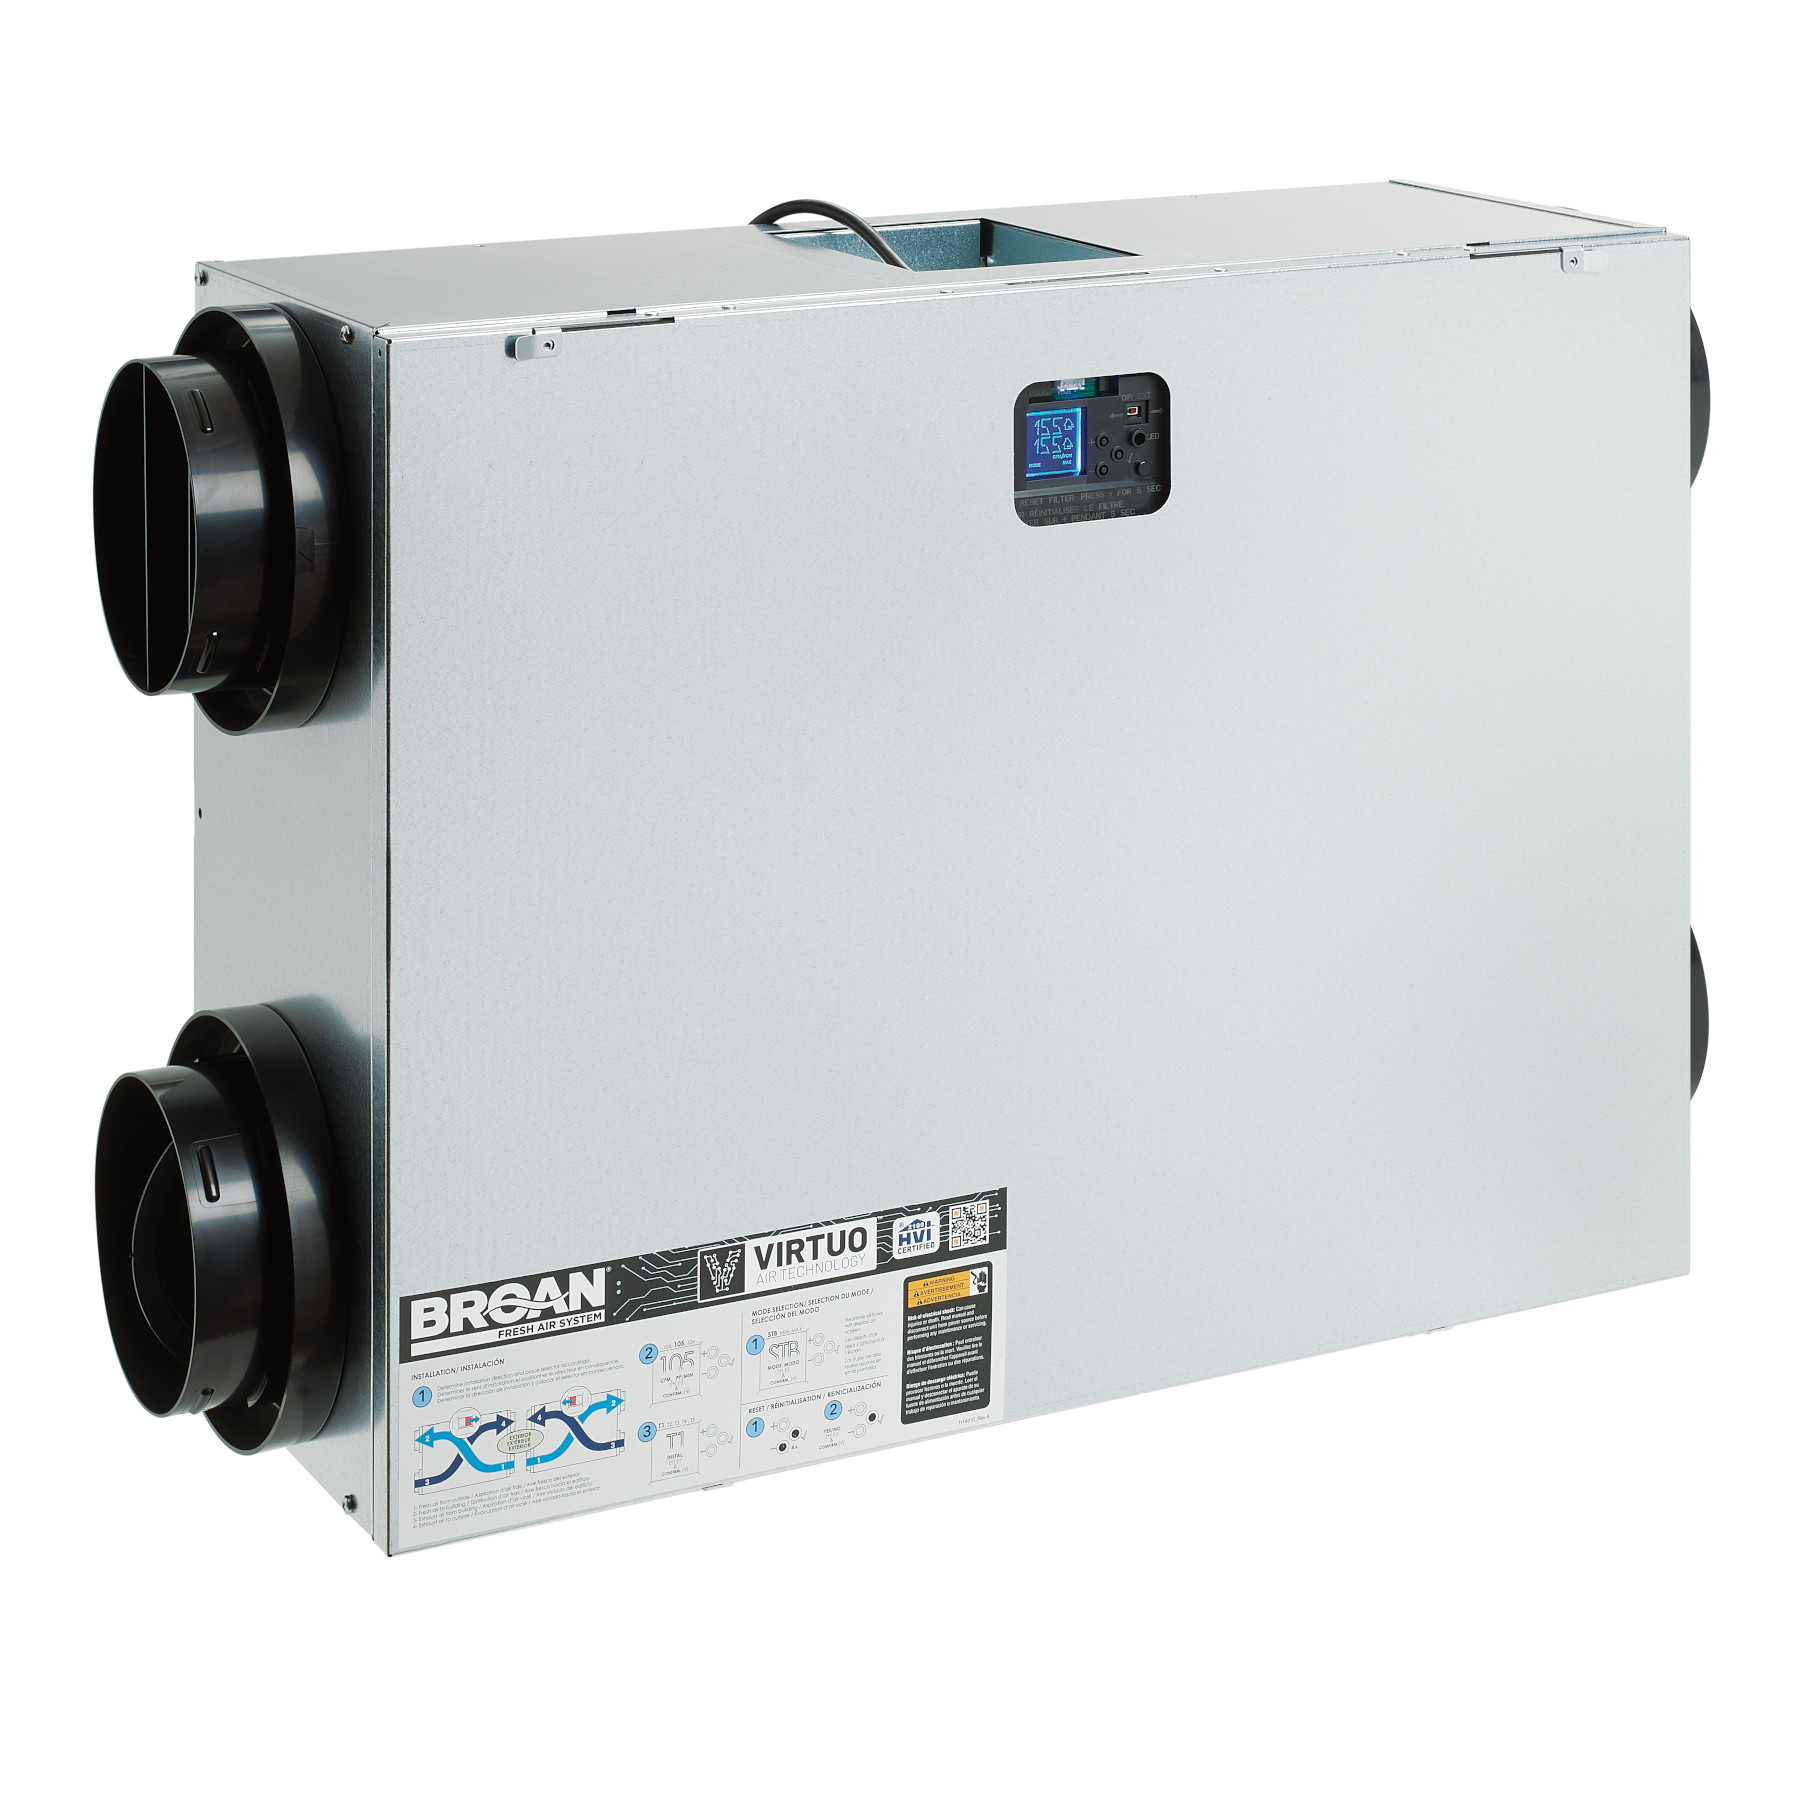 Broan® BLP150 Energy Recovery Ventilator (ERV), Power Cord